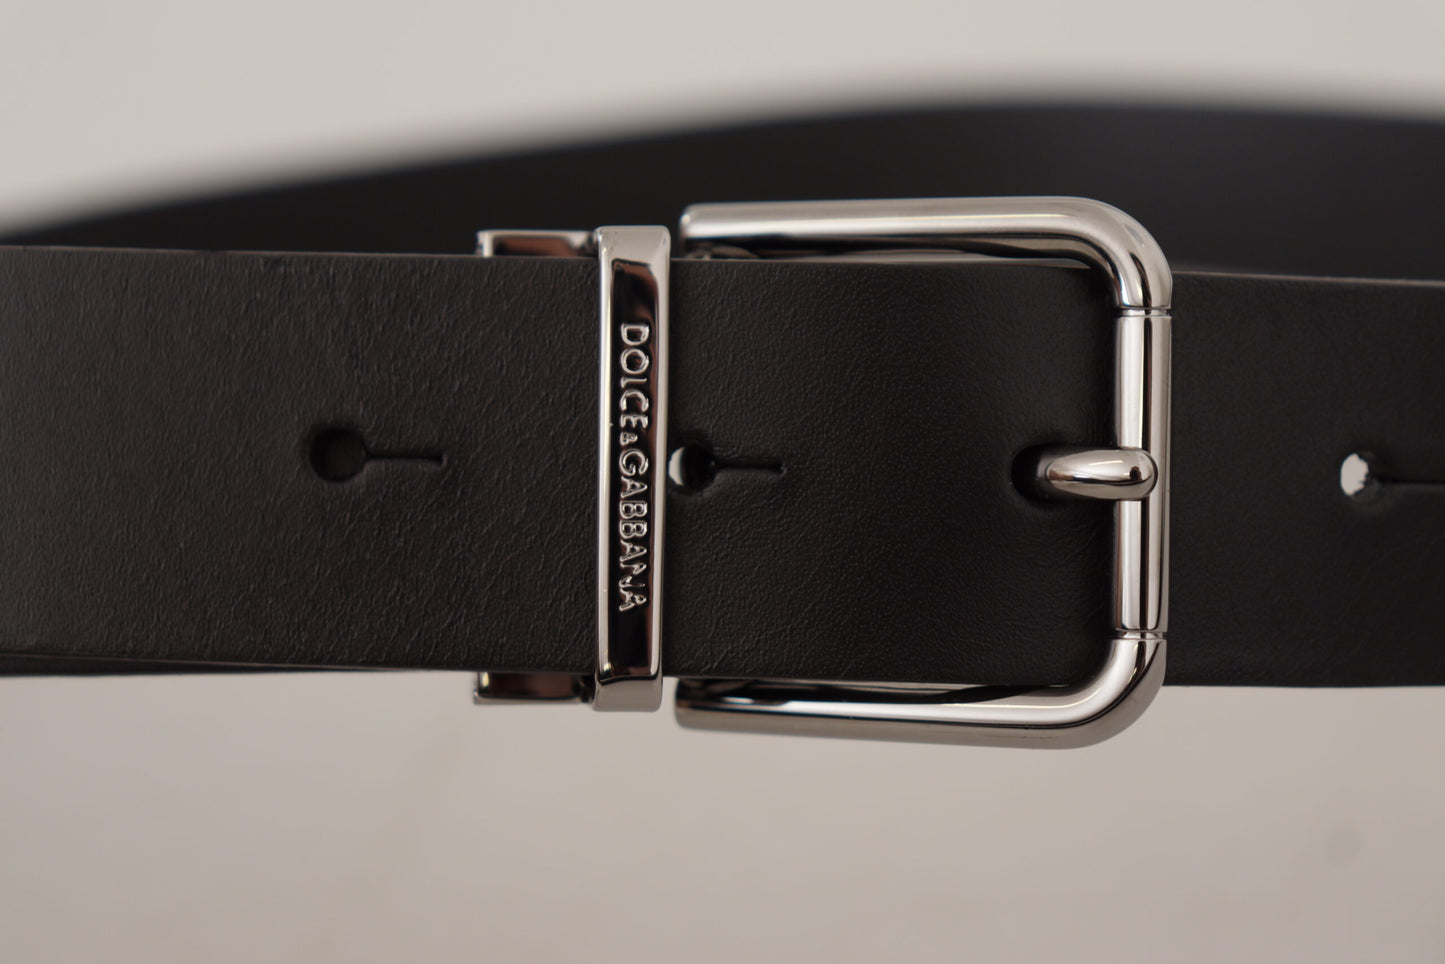 Elegant Black Leather Belt with Metal Buckle